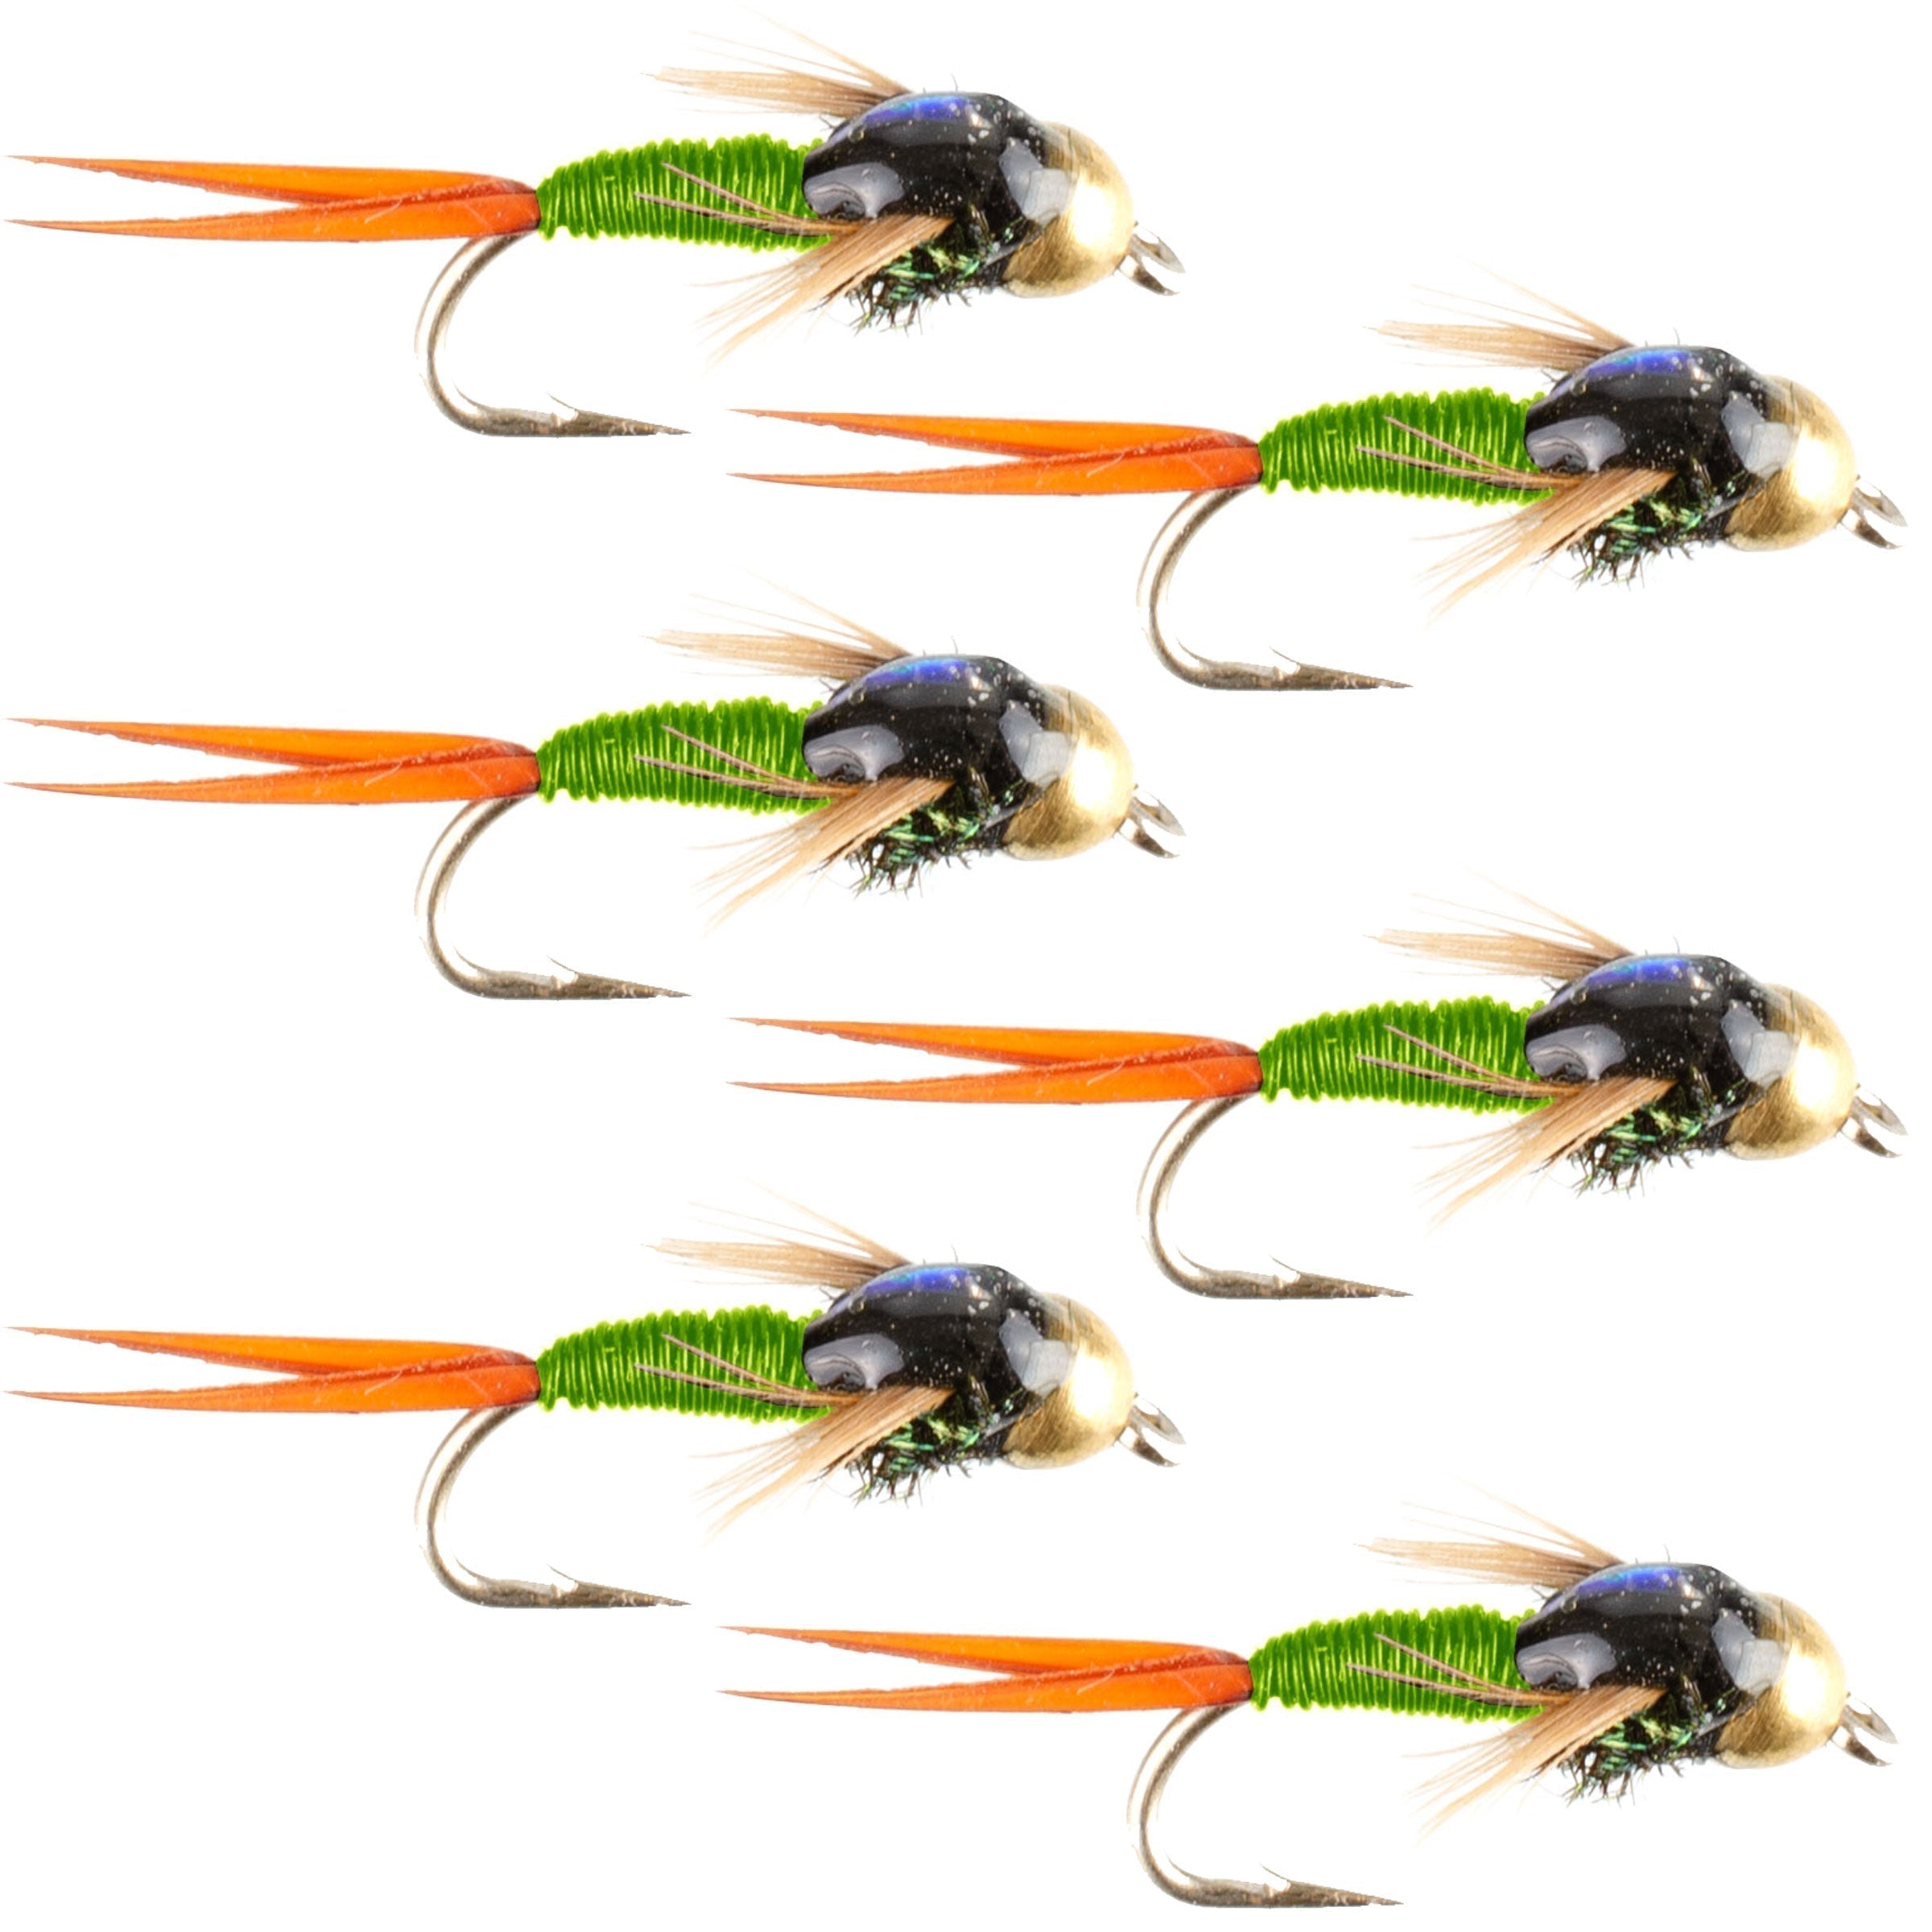 Tungsten Bead Head Chartreuse Copper John Nymph Fly Fishing Flies - Set of 6 Flies Hook Size 18